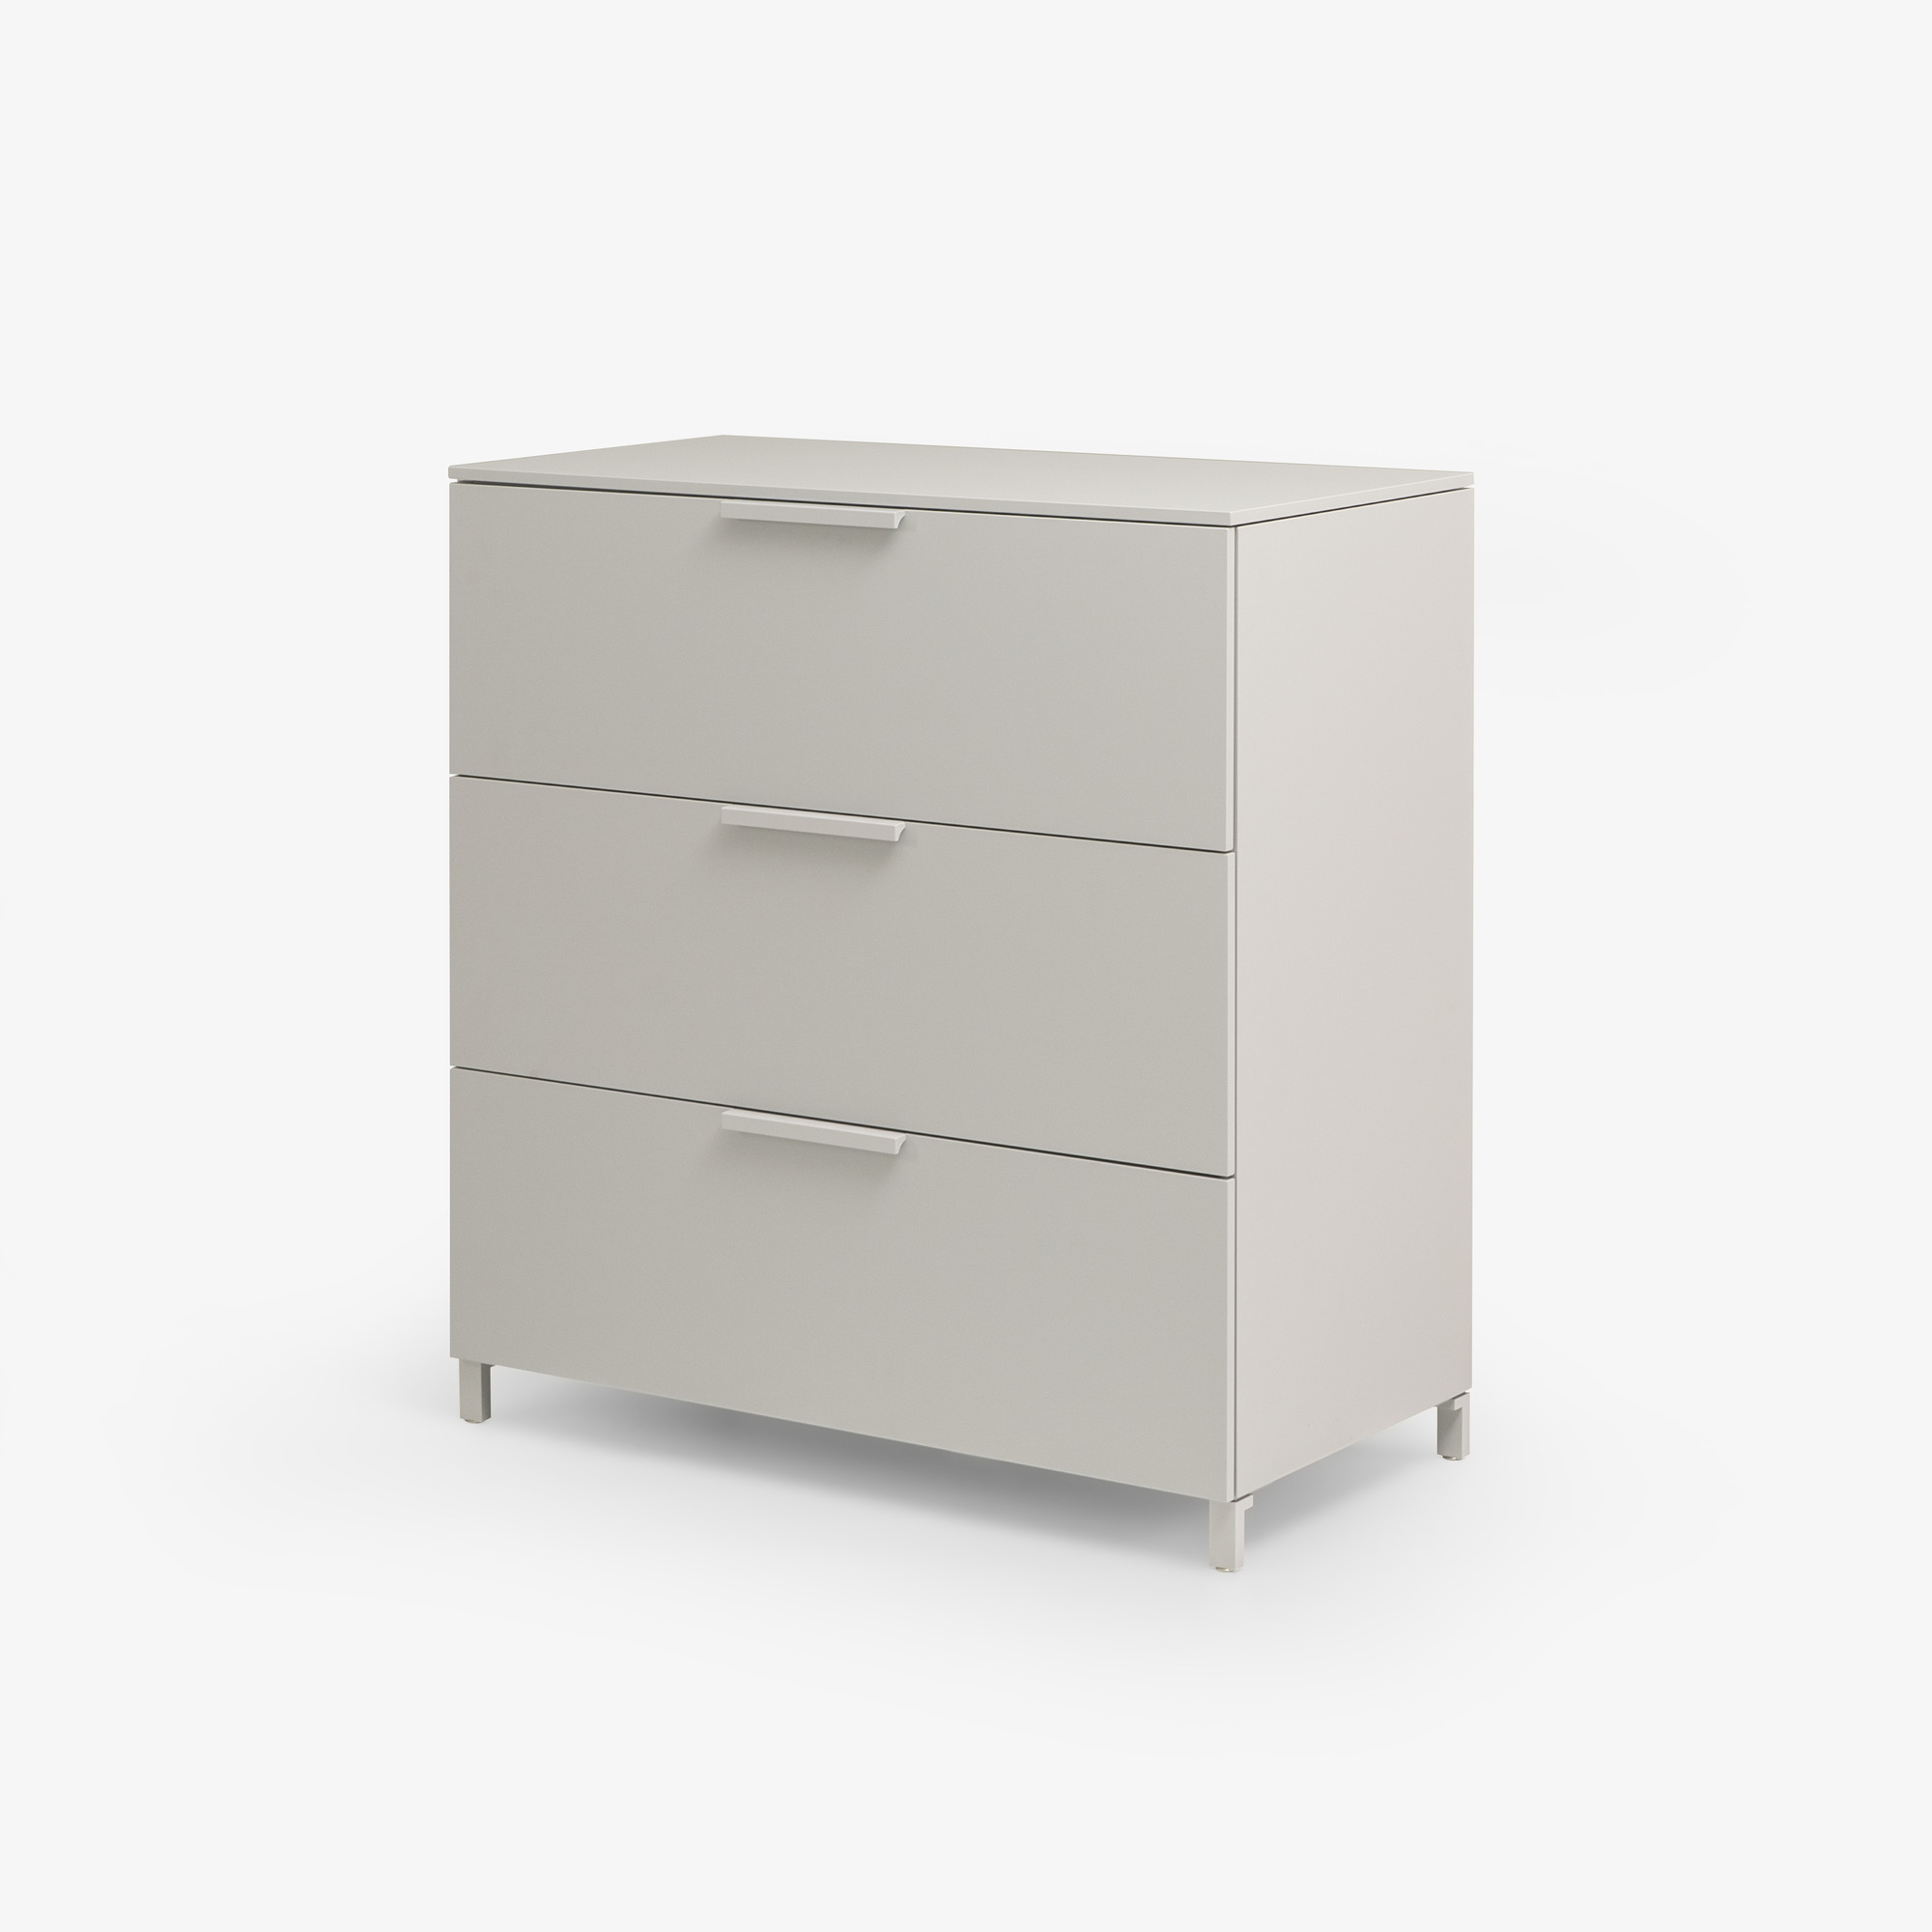 Image Sideboard unit 3 drawers c 3 2